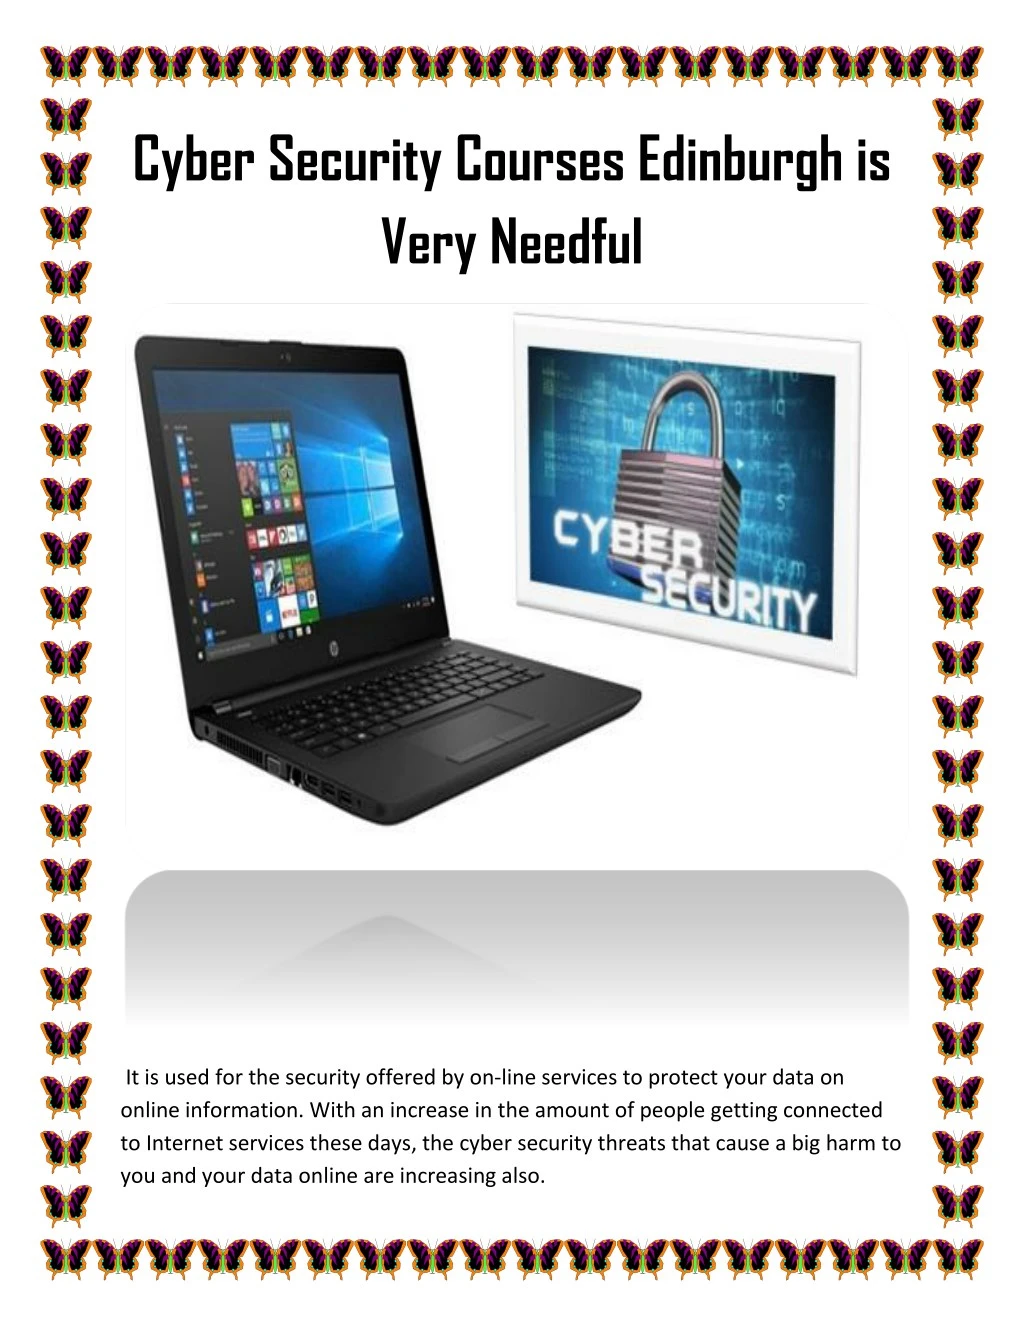 cyber security courses edinburgh is very needful